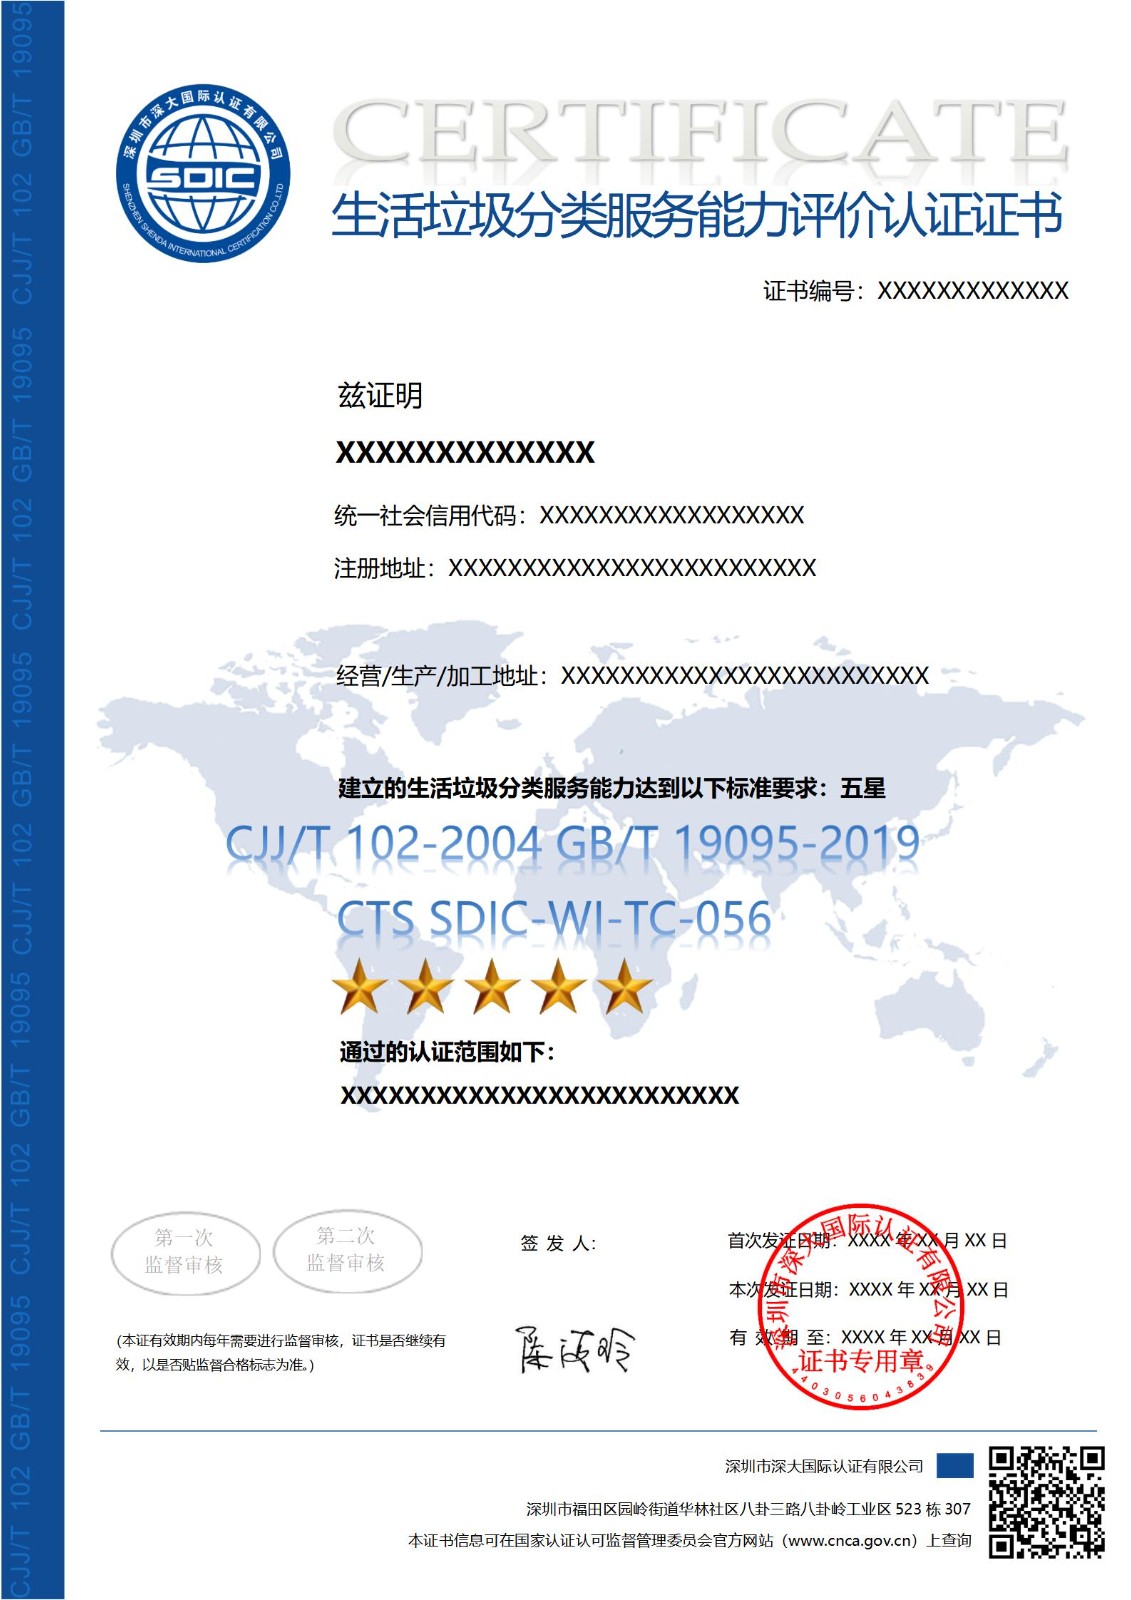 CJJ/T 102 GB/T 19095生活垃圾分类服务能力评价认证证书